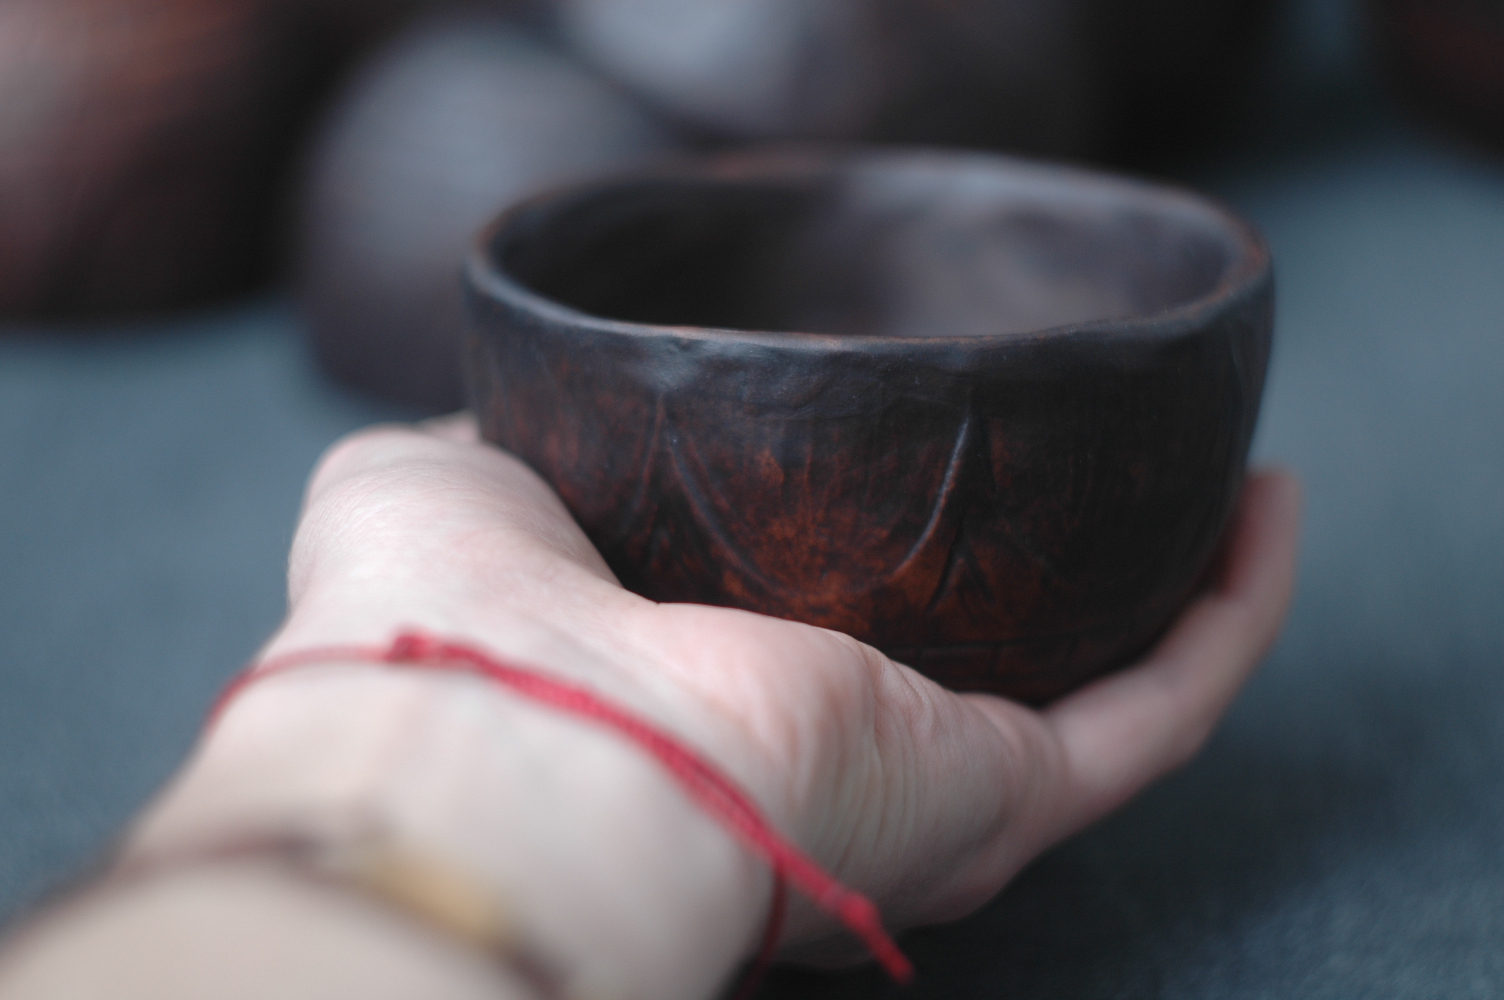 Pottery bowl “Sun”